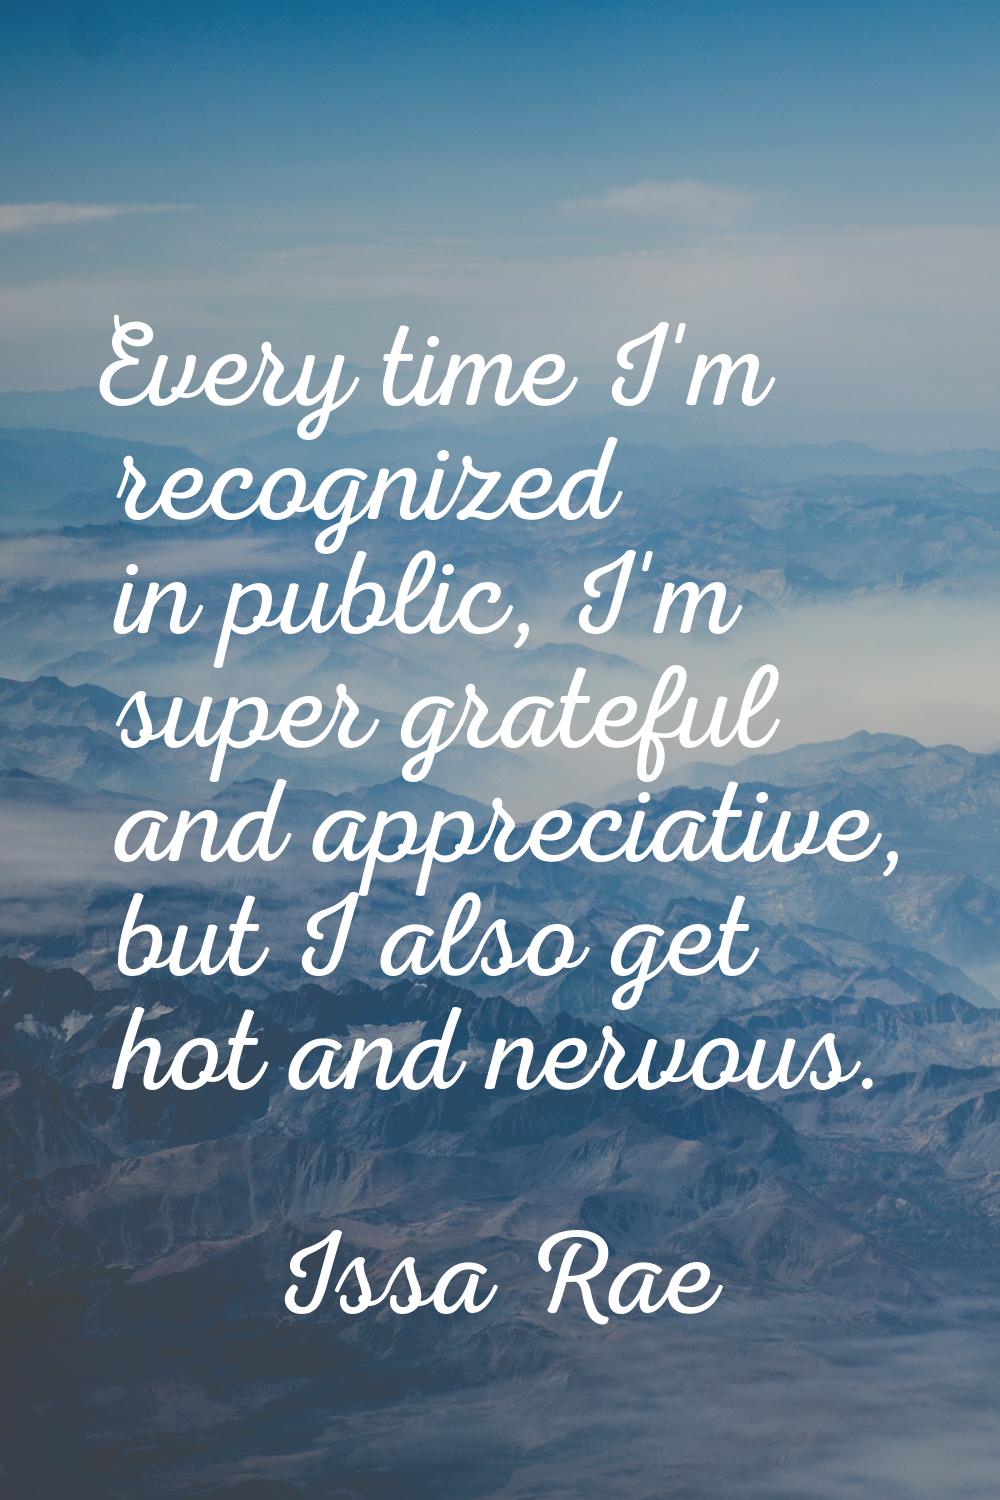 Every time I'm recognized in public, I'm super grateful and appreciative, but I also get hot and ne